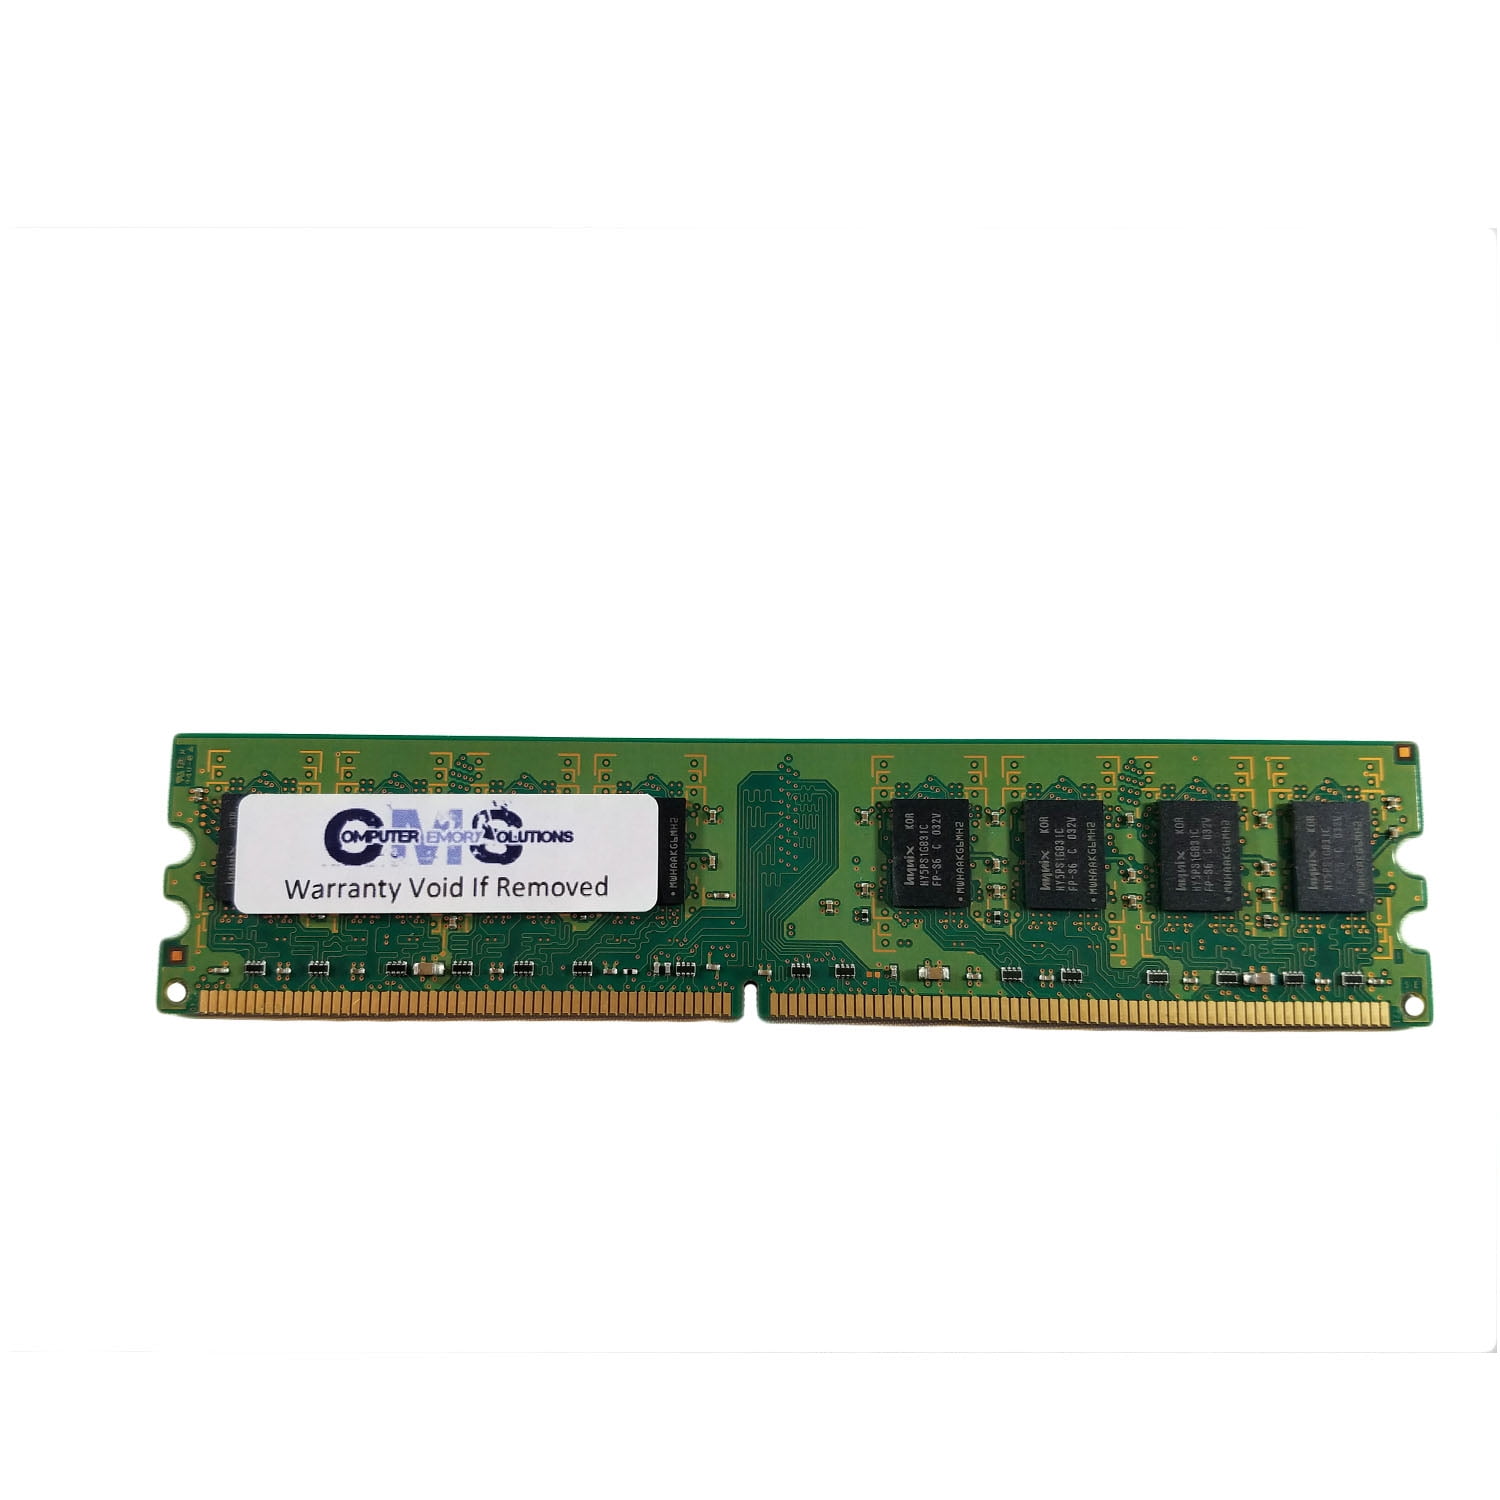 PC2-5300 1GB DDR2-667 ECC RAM Memory Upgrade for The ASUS M2N32-SLI Deluxe/Wireless Edition Desktop Board 